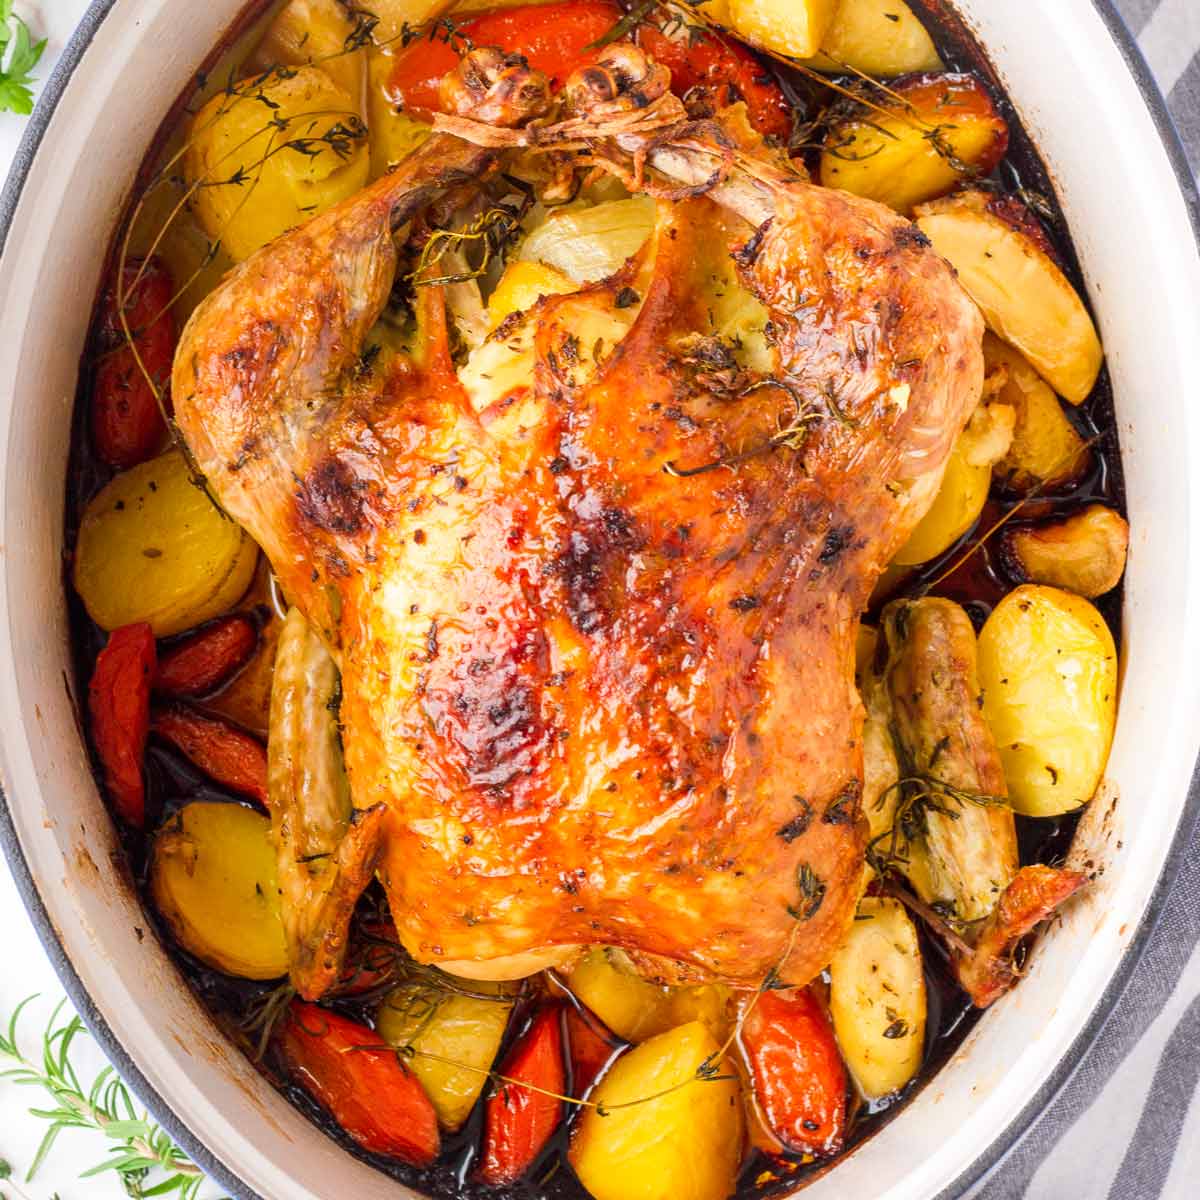 https://cookingformysoul.com/wp-content/uploads/2021/11/dutch-oven-whole-chicken-wprm-min.jpg